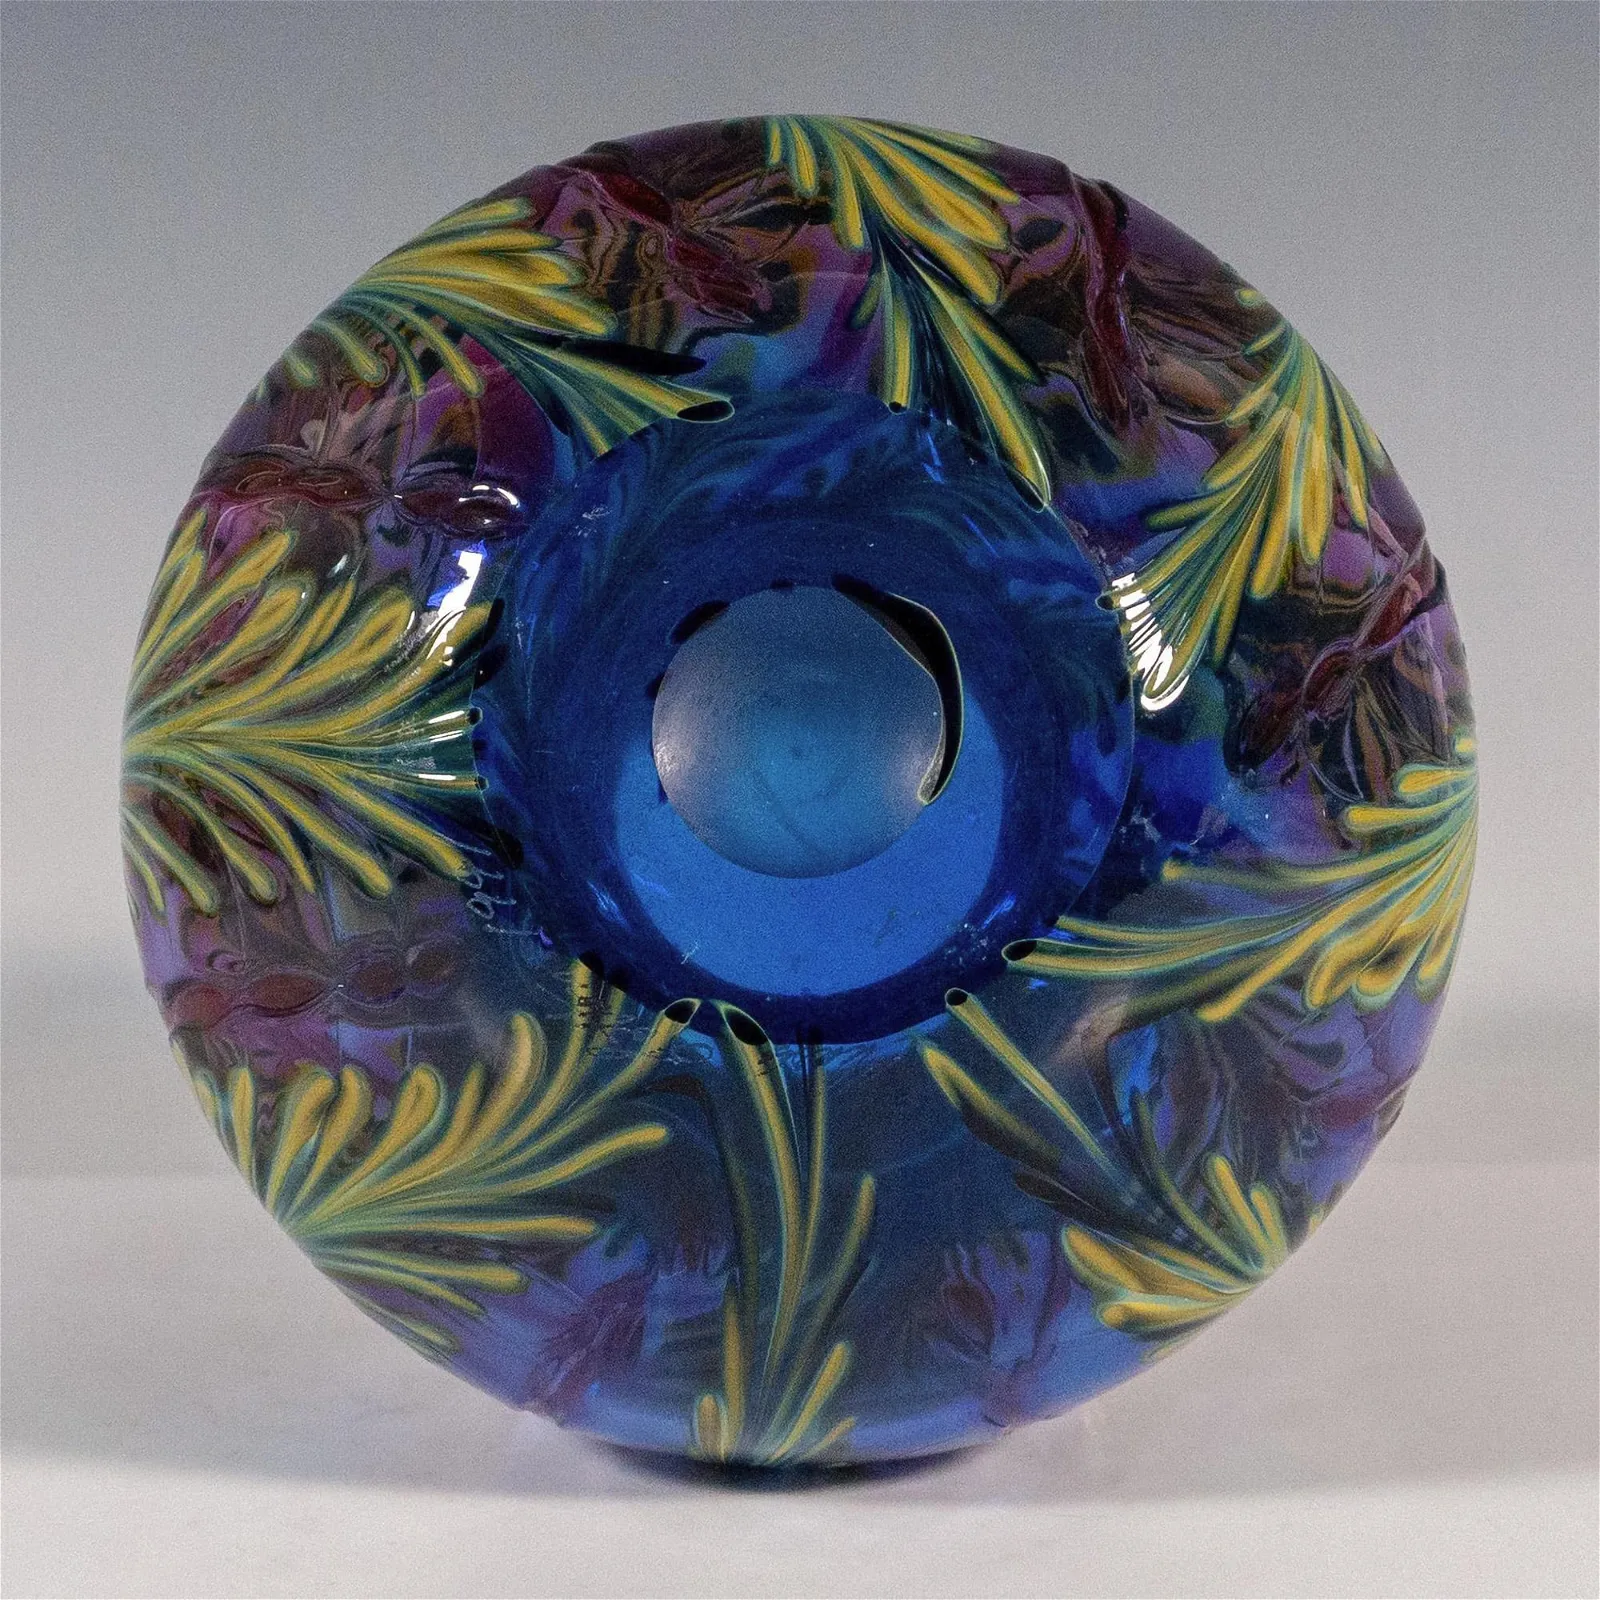 Charles Lotton Art Glass Studio Vase, Wisteria Signed